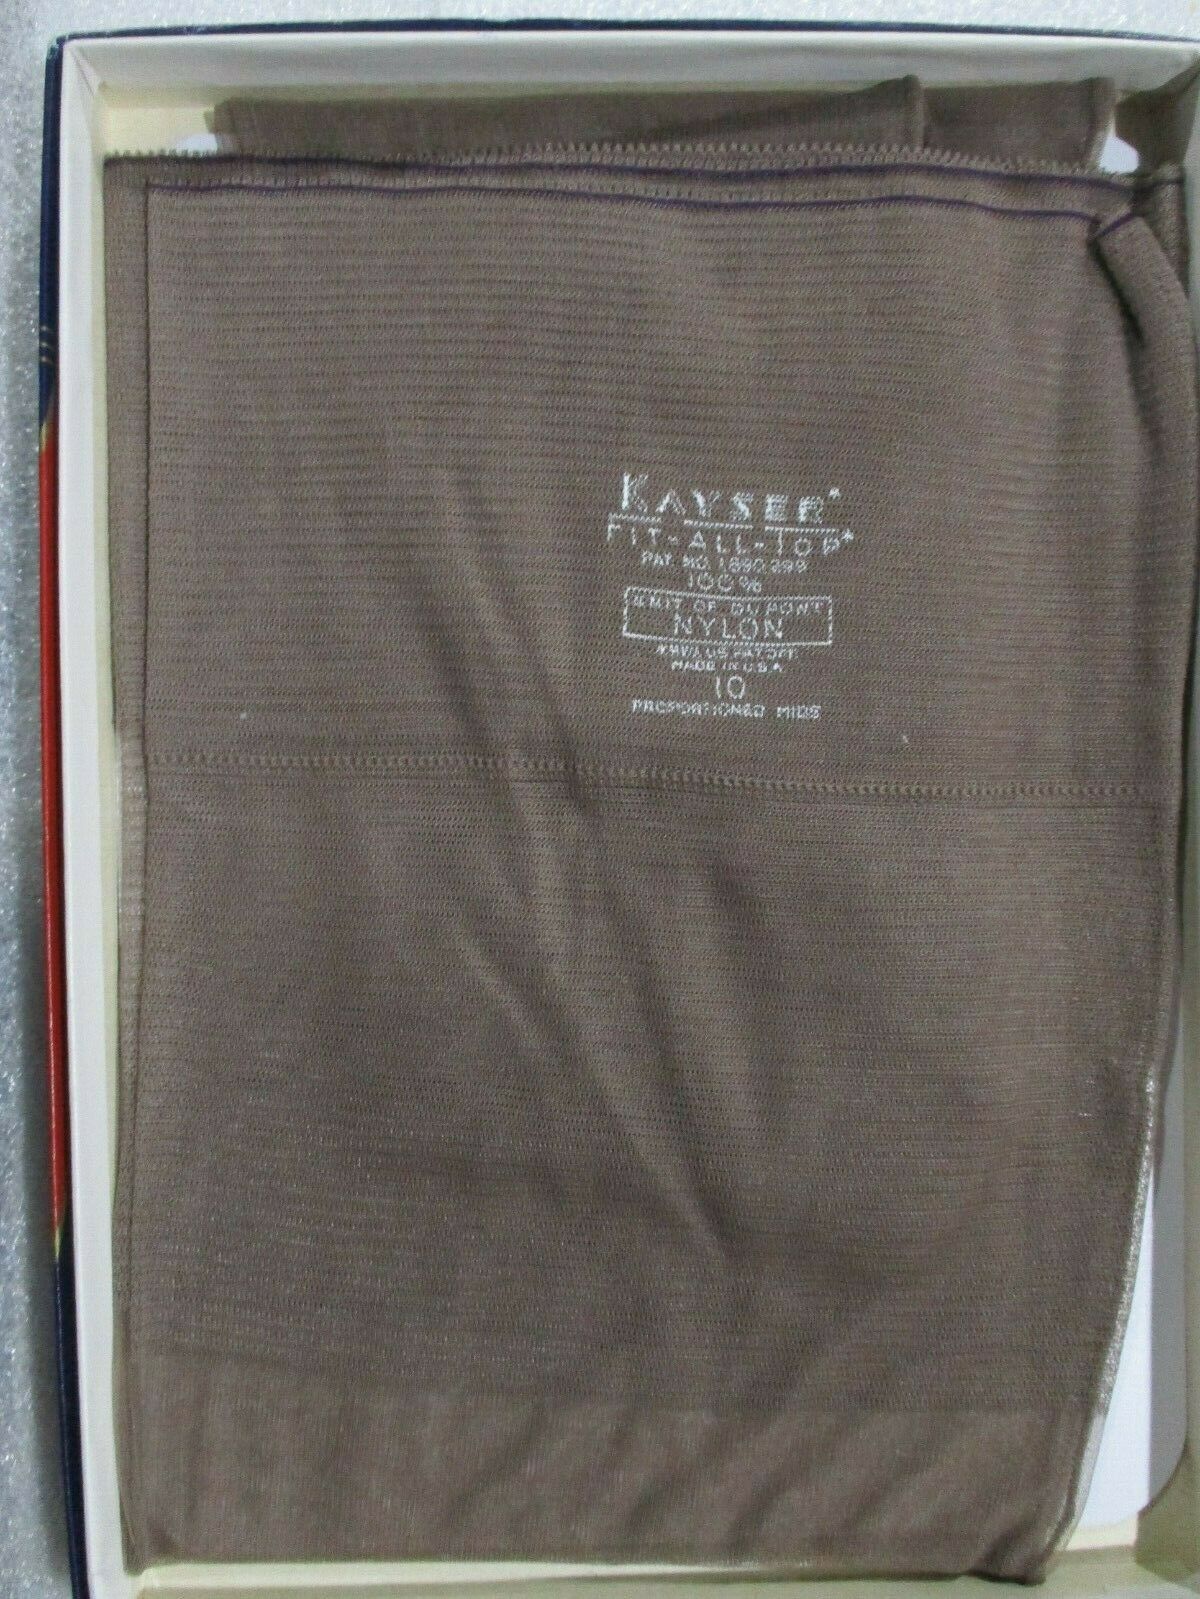 1 Pr Vintage Kayser Seamed Full Fashion Sheer Nylon Stockings Size 10 Med Taupe